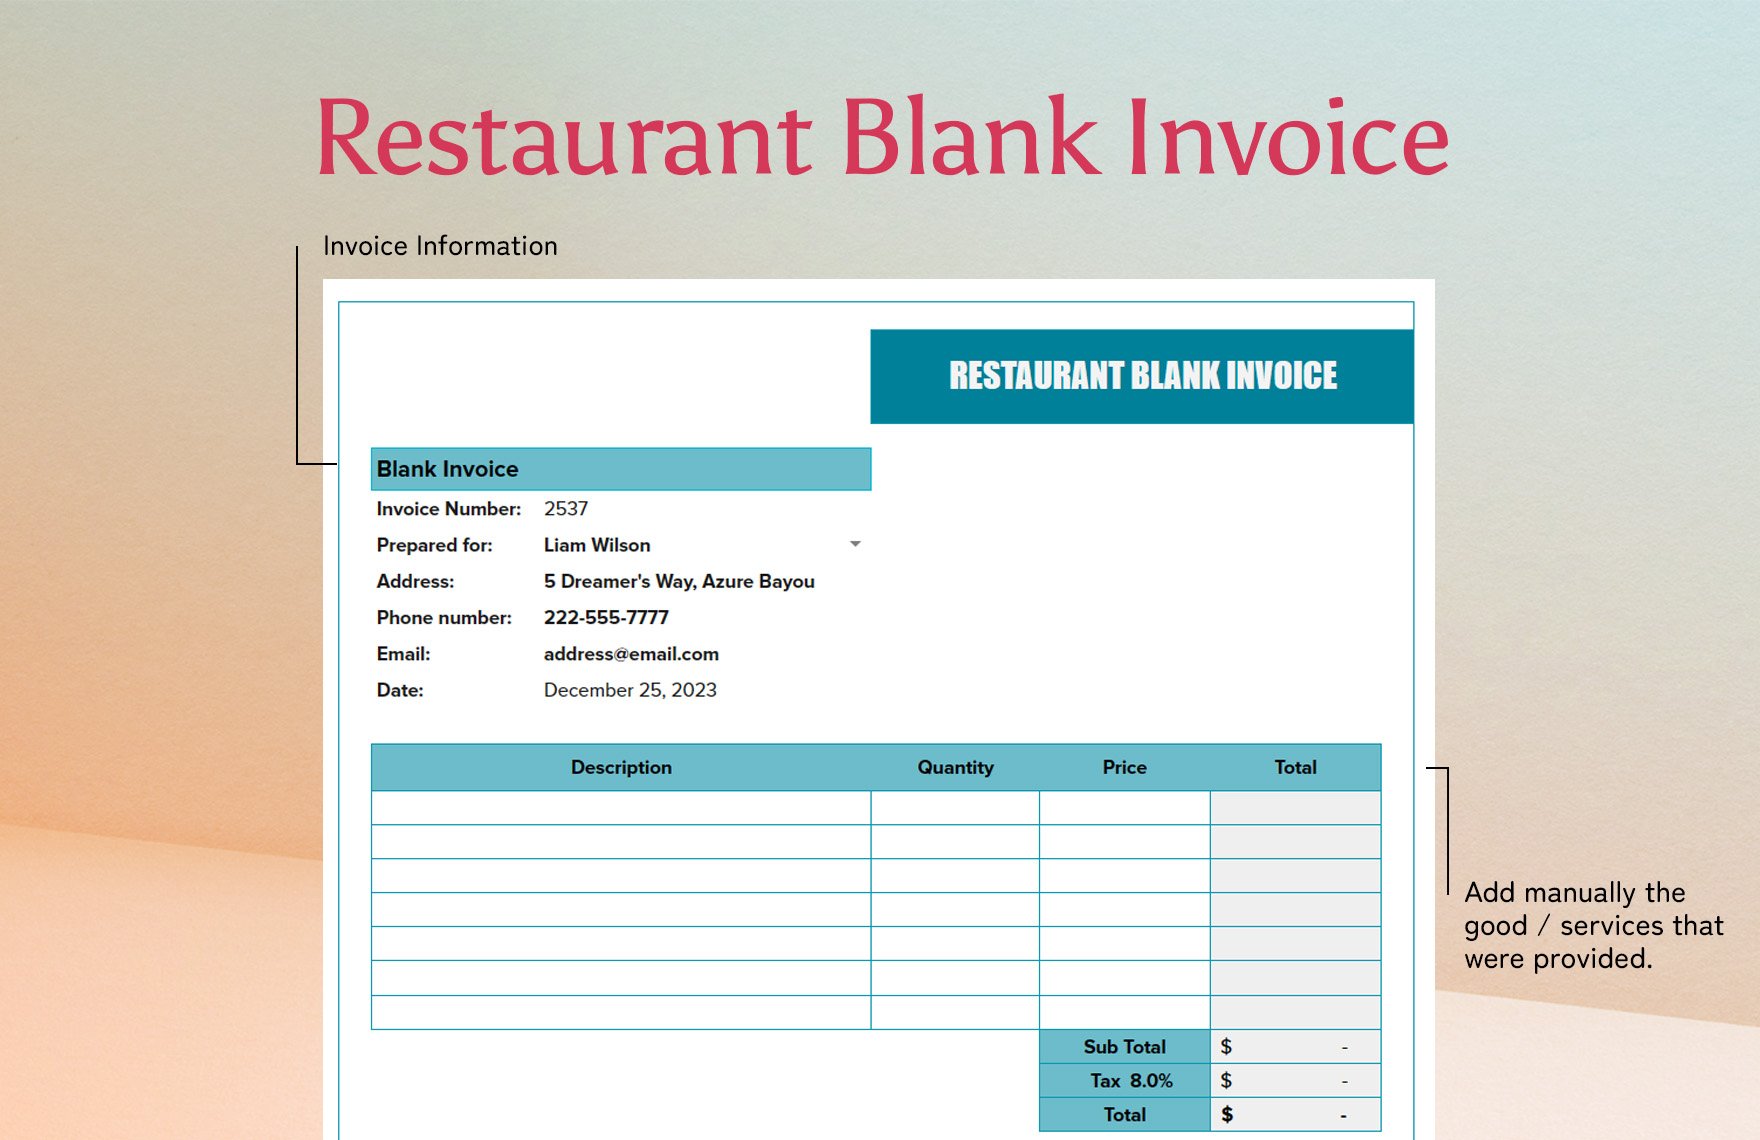 Restaurant Blank Invoice Template